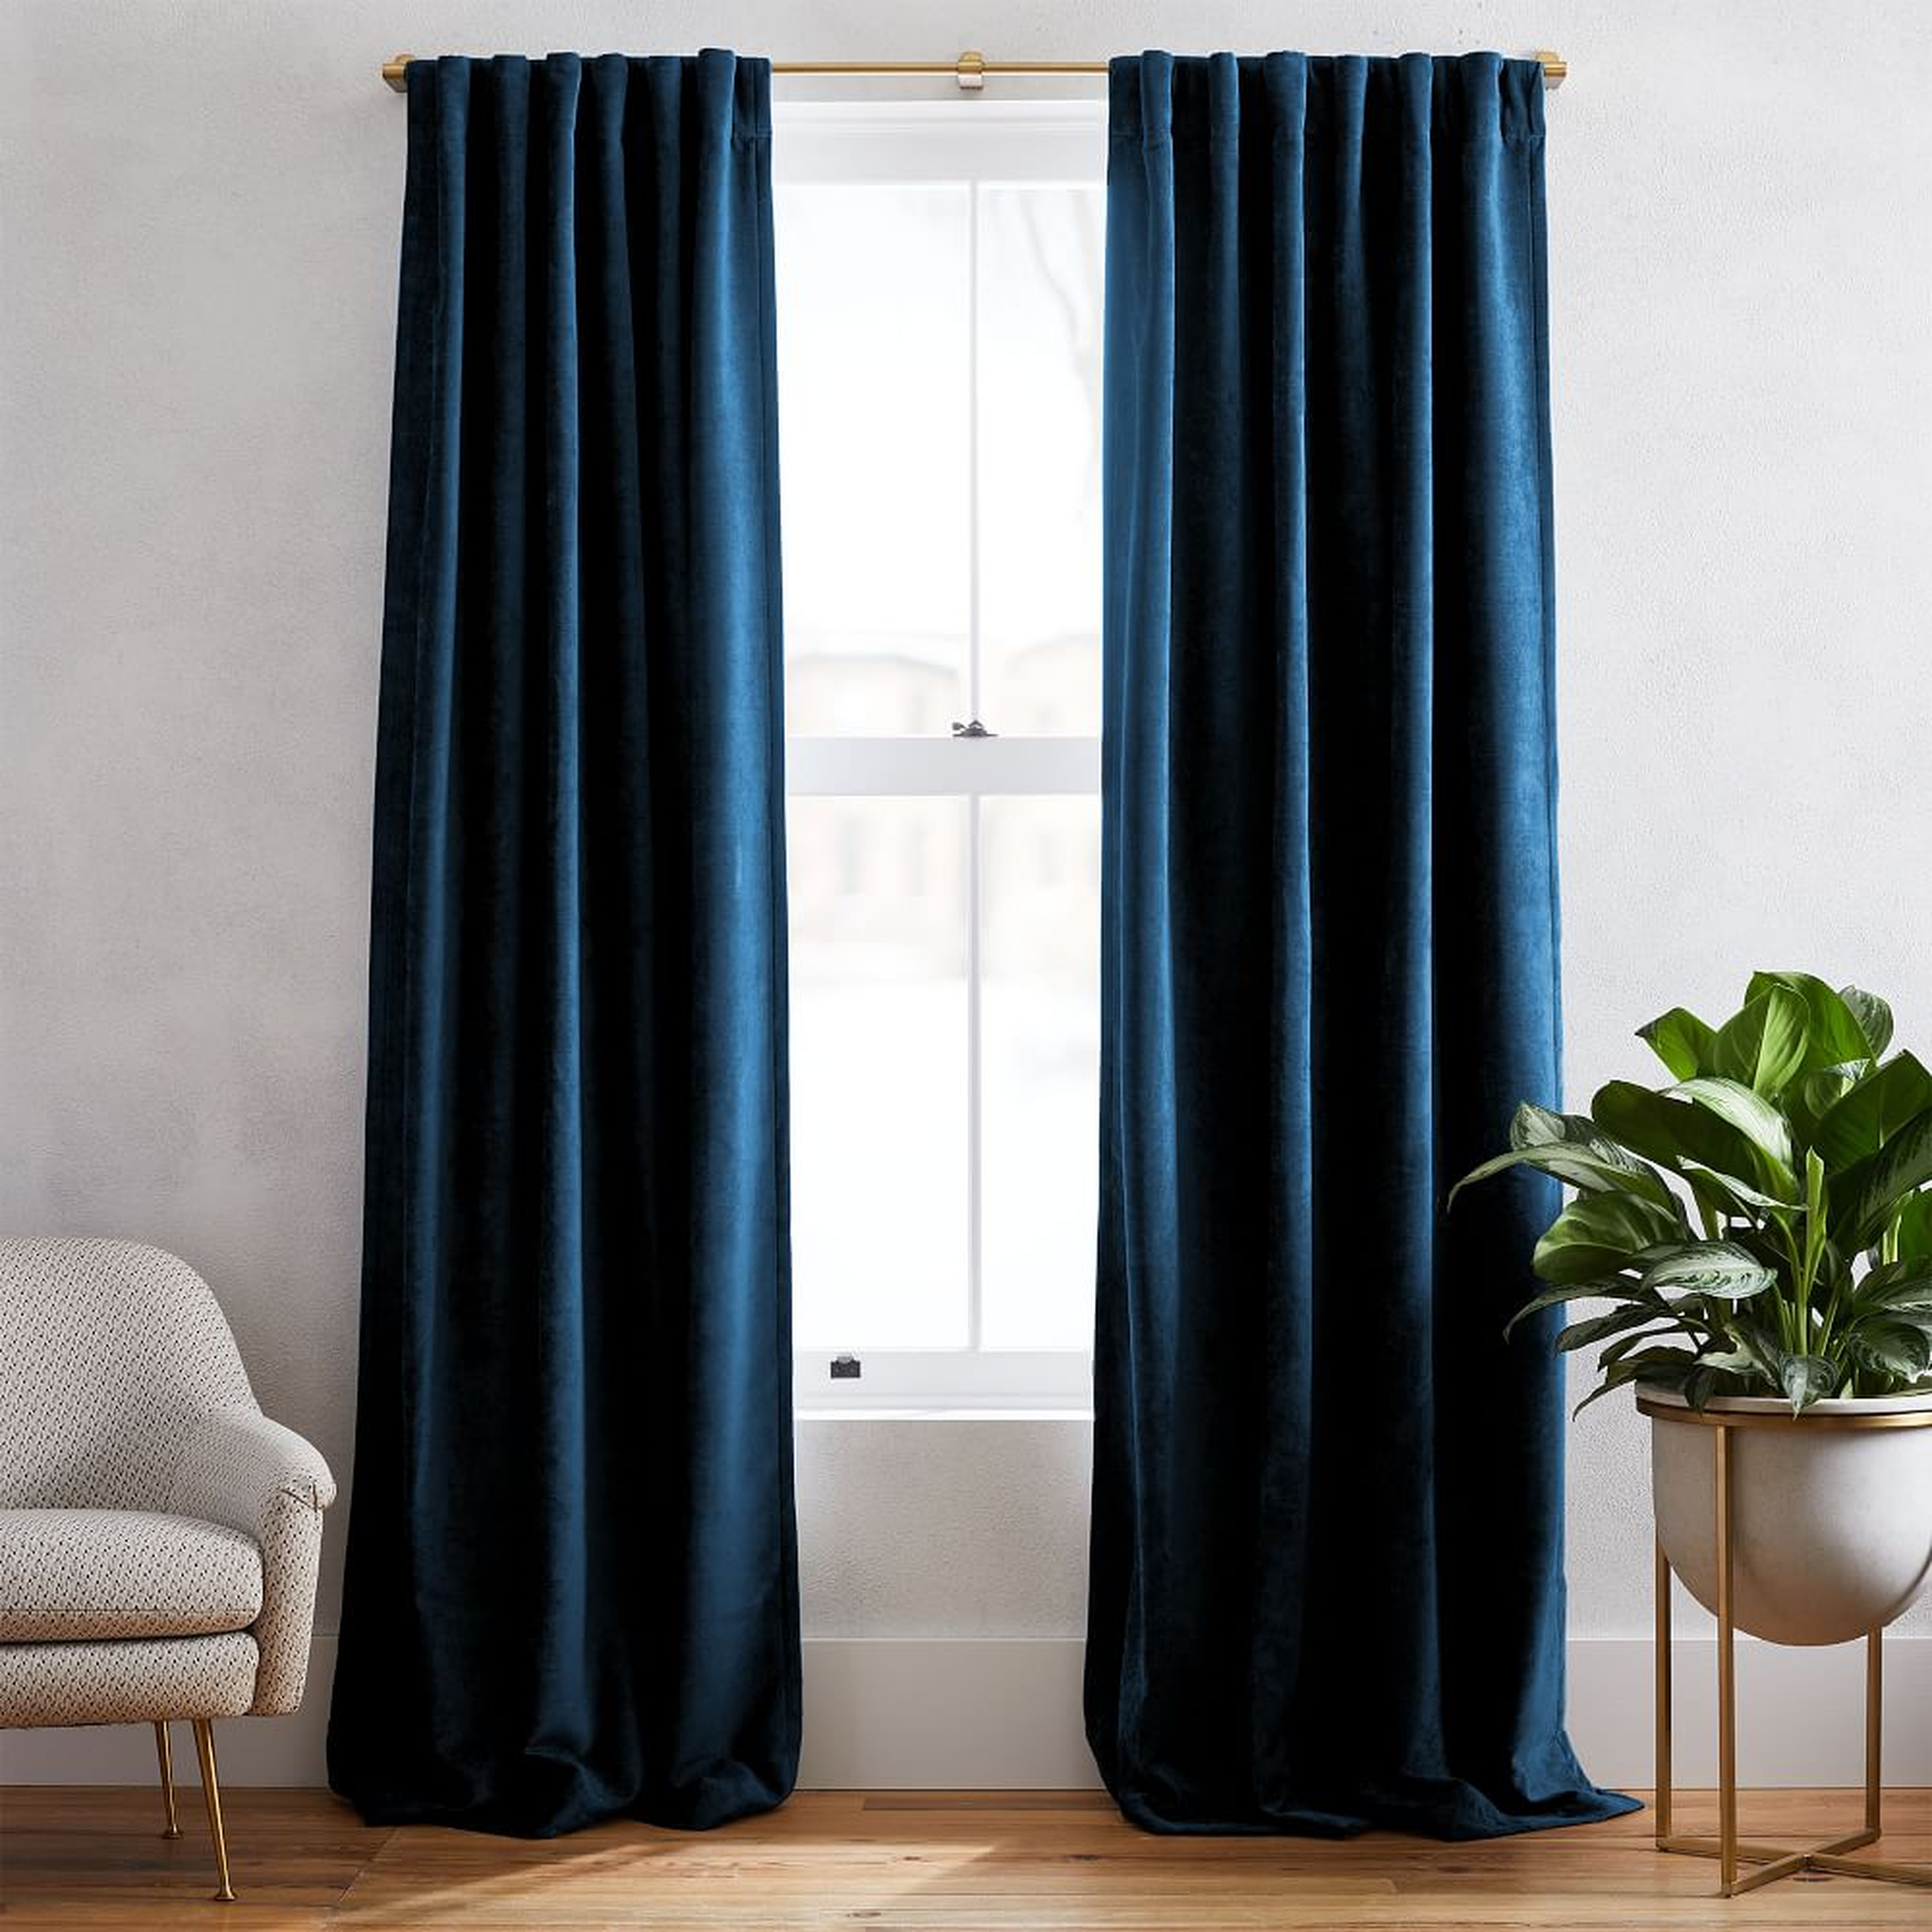 Worn Velvet Curtain with Cotton Lining, Regal Blue, 48"x84", Set of 2 - West Elm